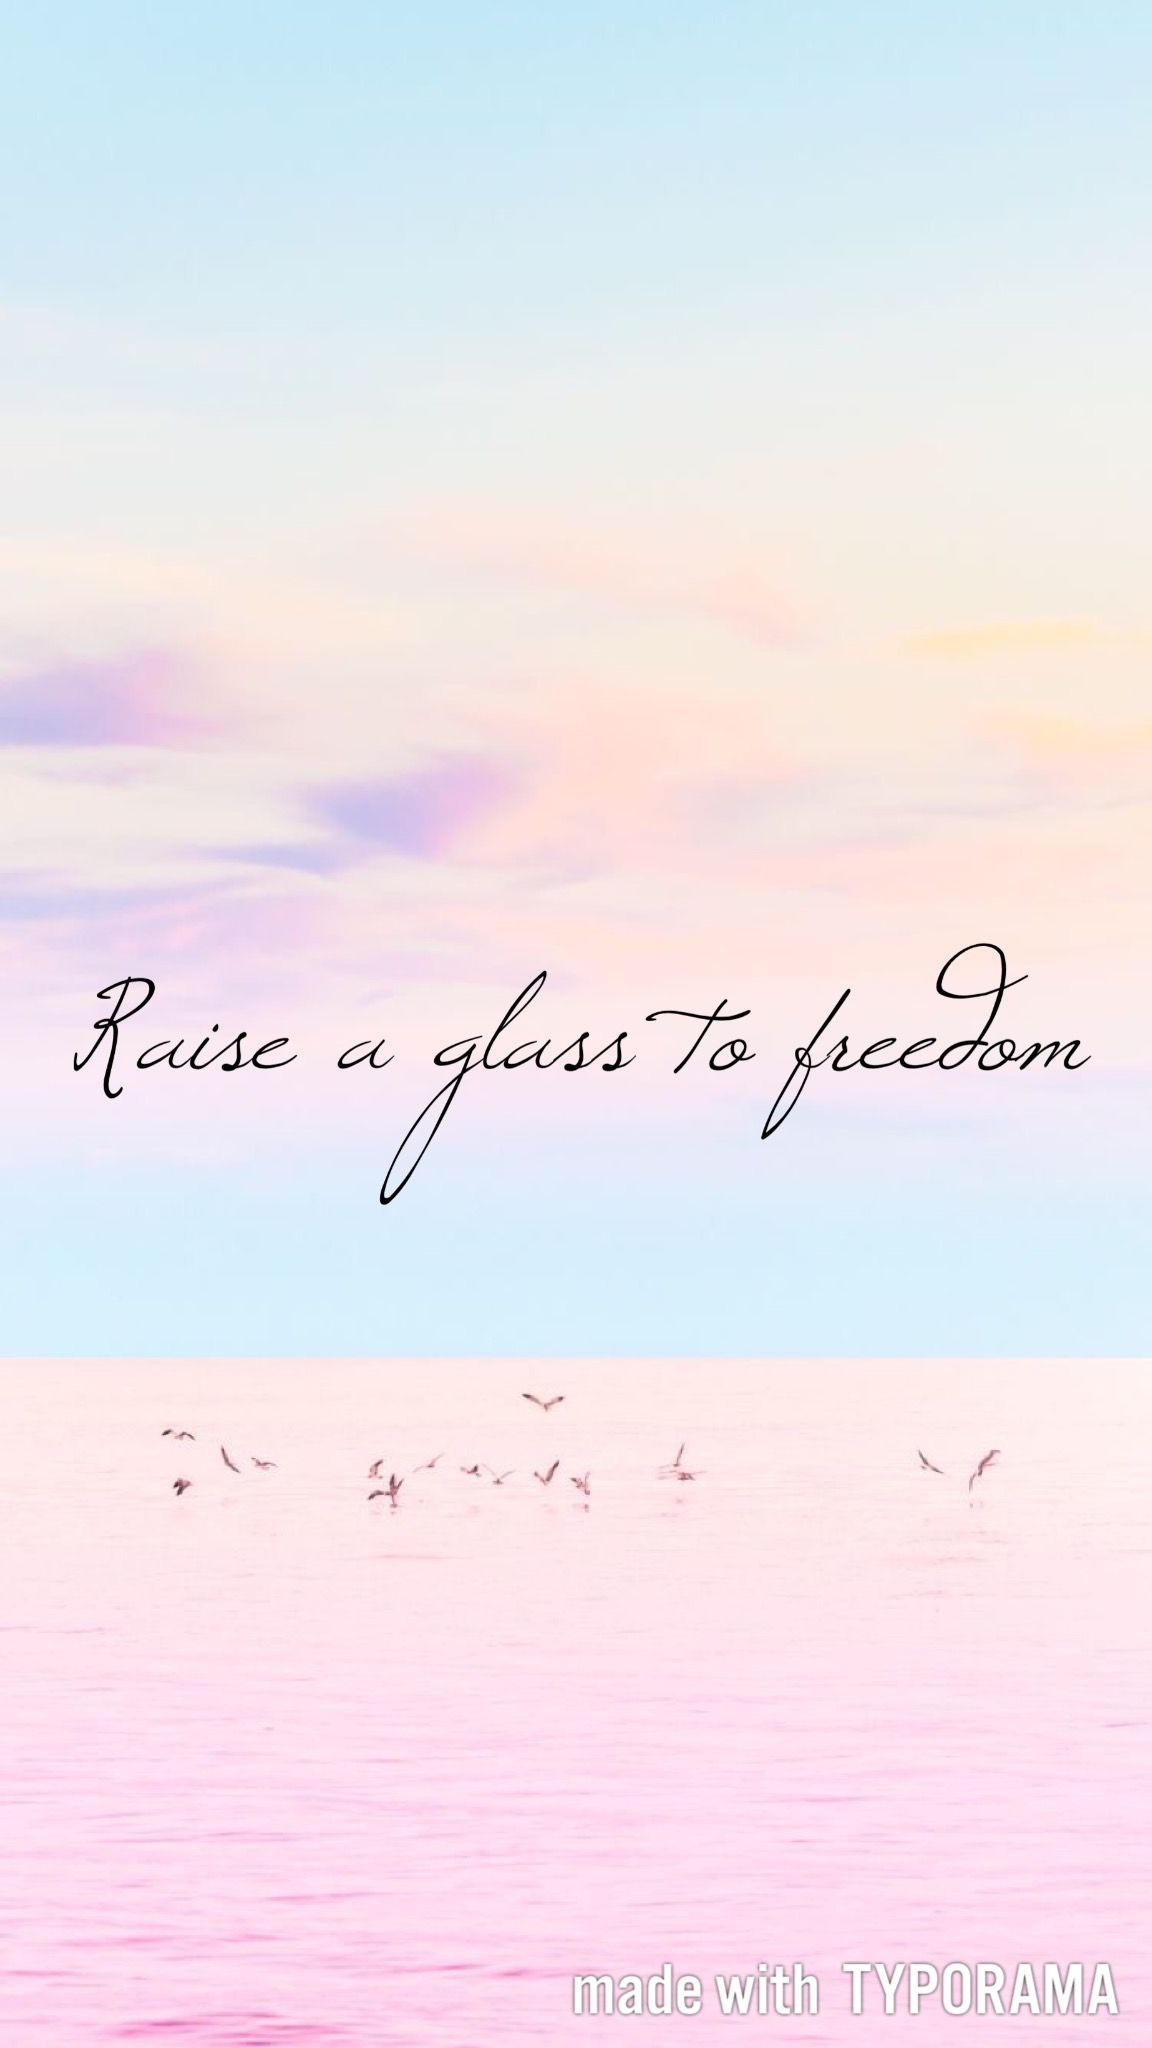 Raise a glass to freedom. - Broadway, Hamilton